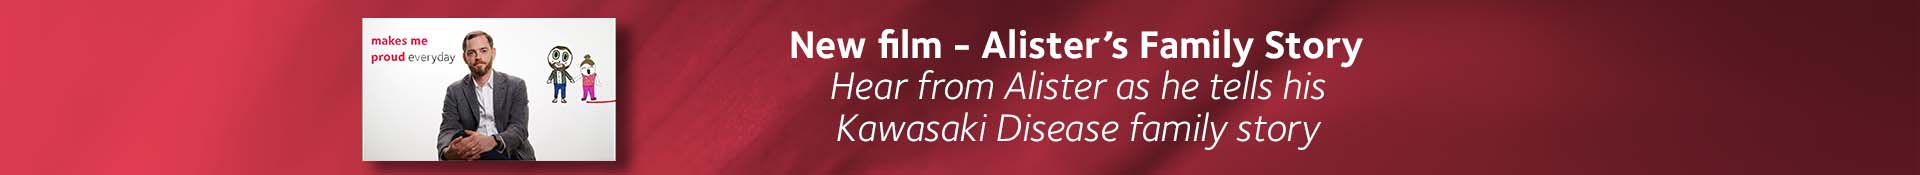 New film - Alister